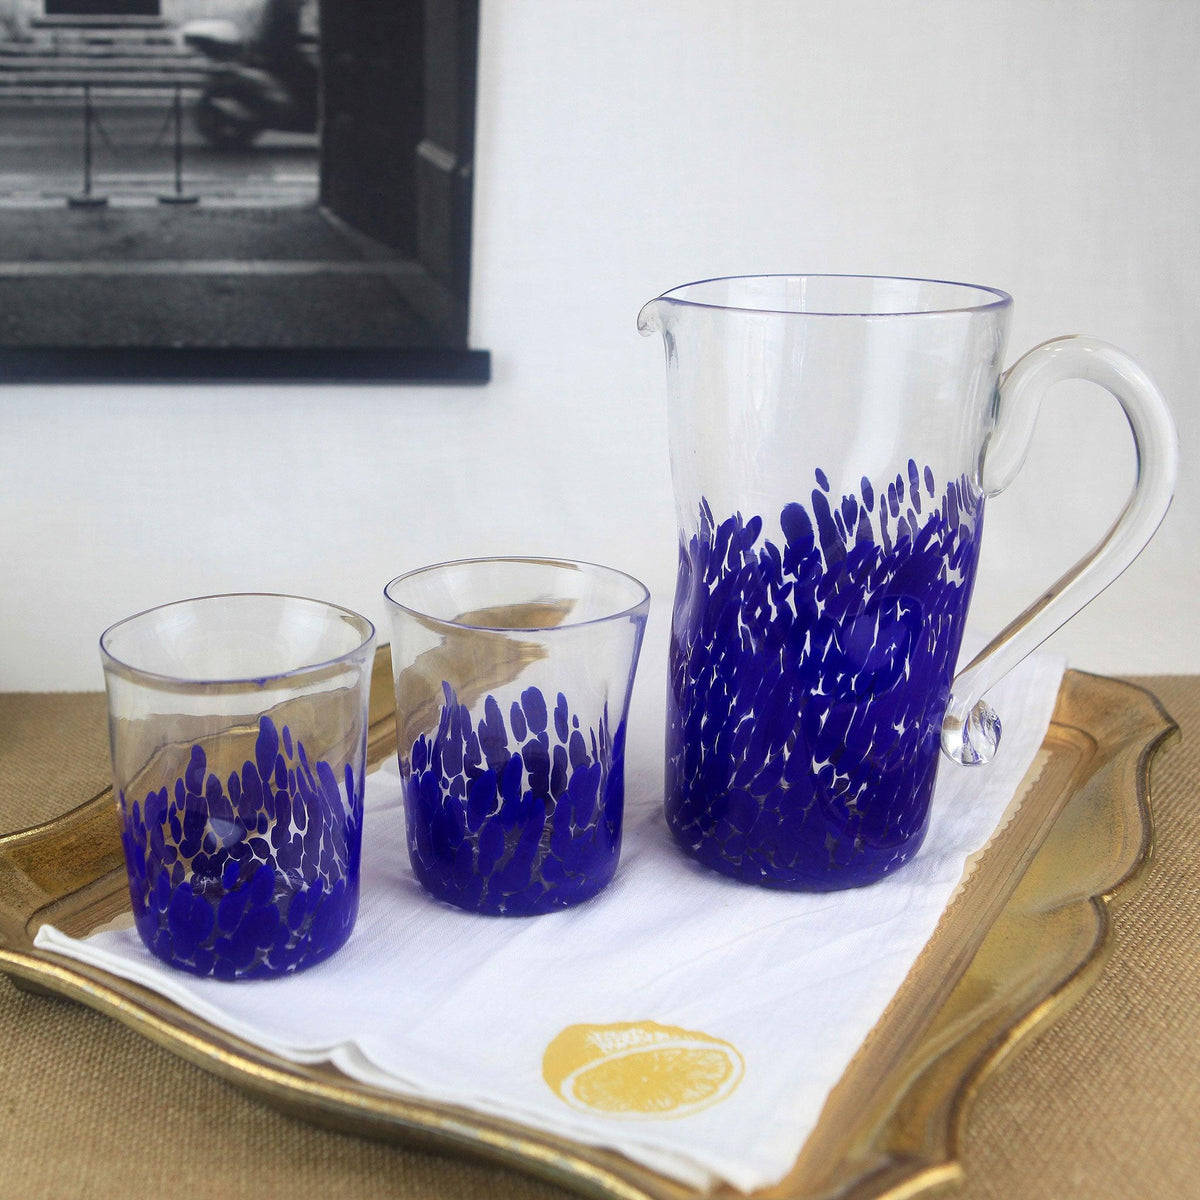 Allegra Murano Glass Pitcher &amp; Glasses Set, Cobalt Blue, Made in Italy - My Italian Decor